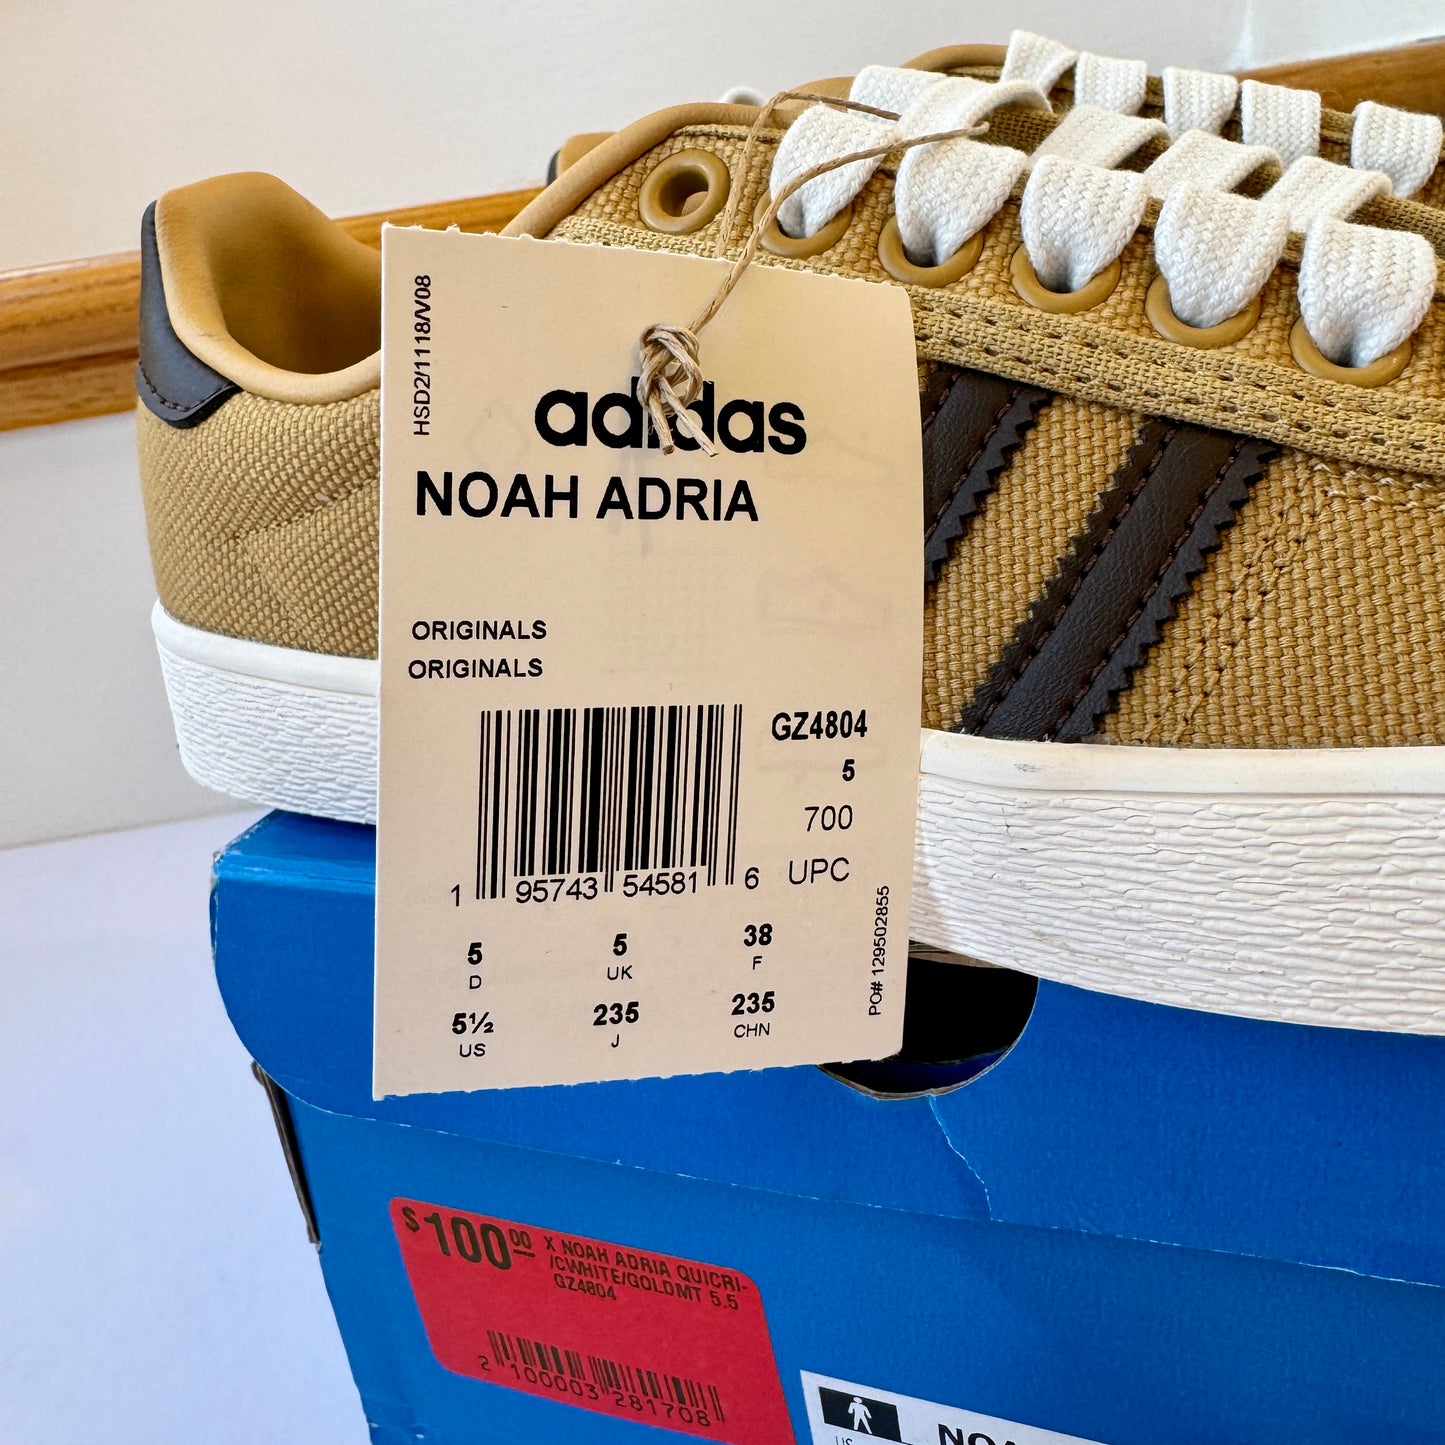 Adidas x Noah Adria Collab Sneakers in  Golden Beige Tan Brown Shoes